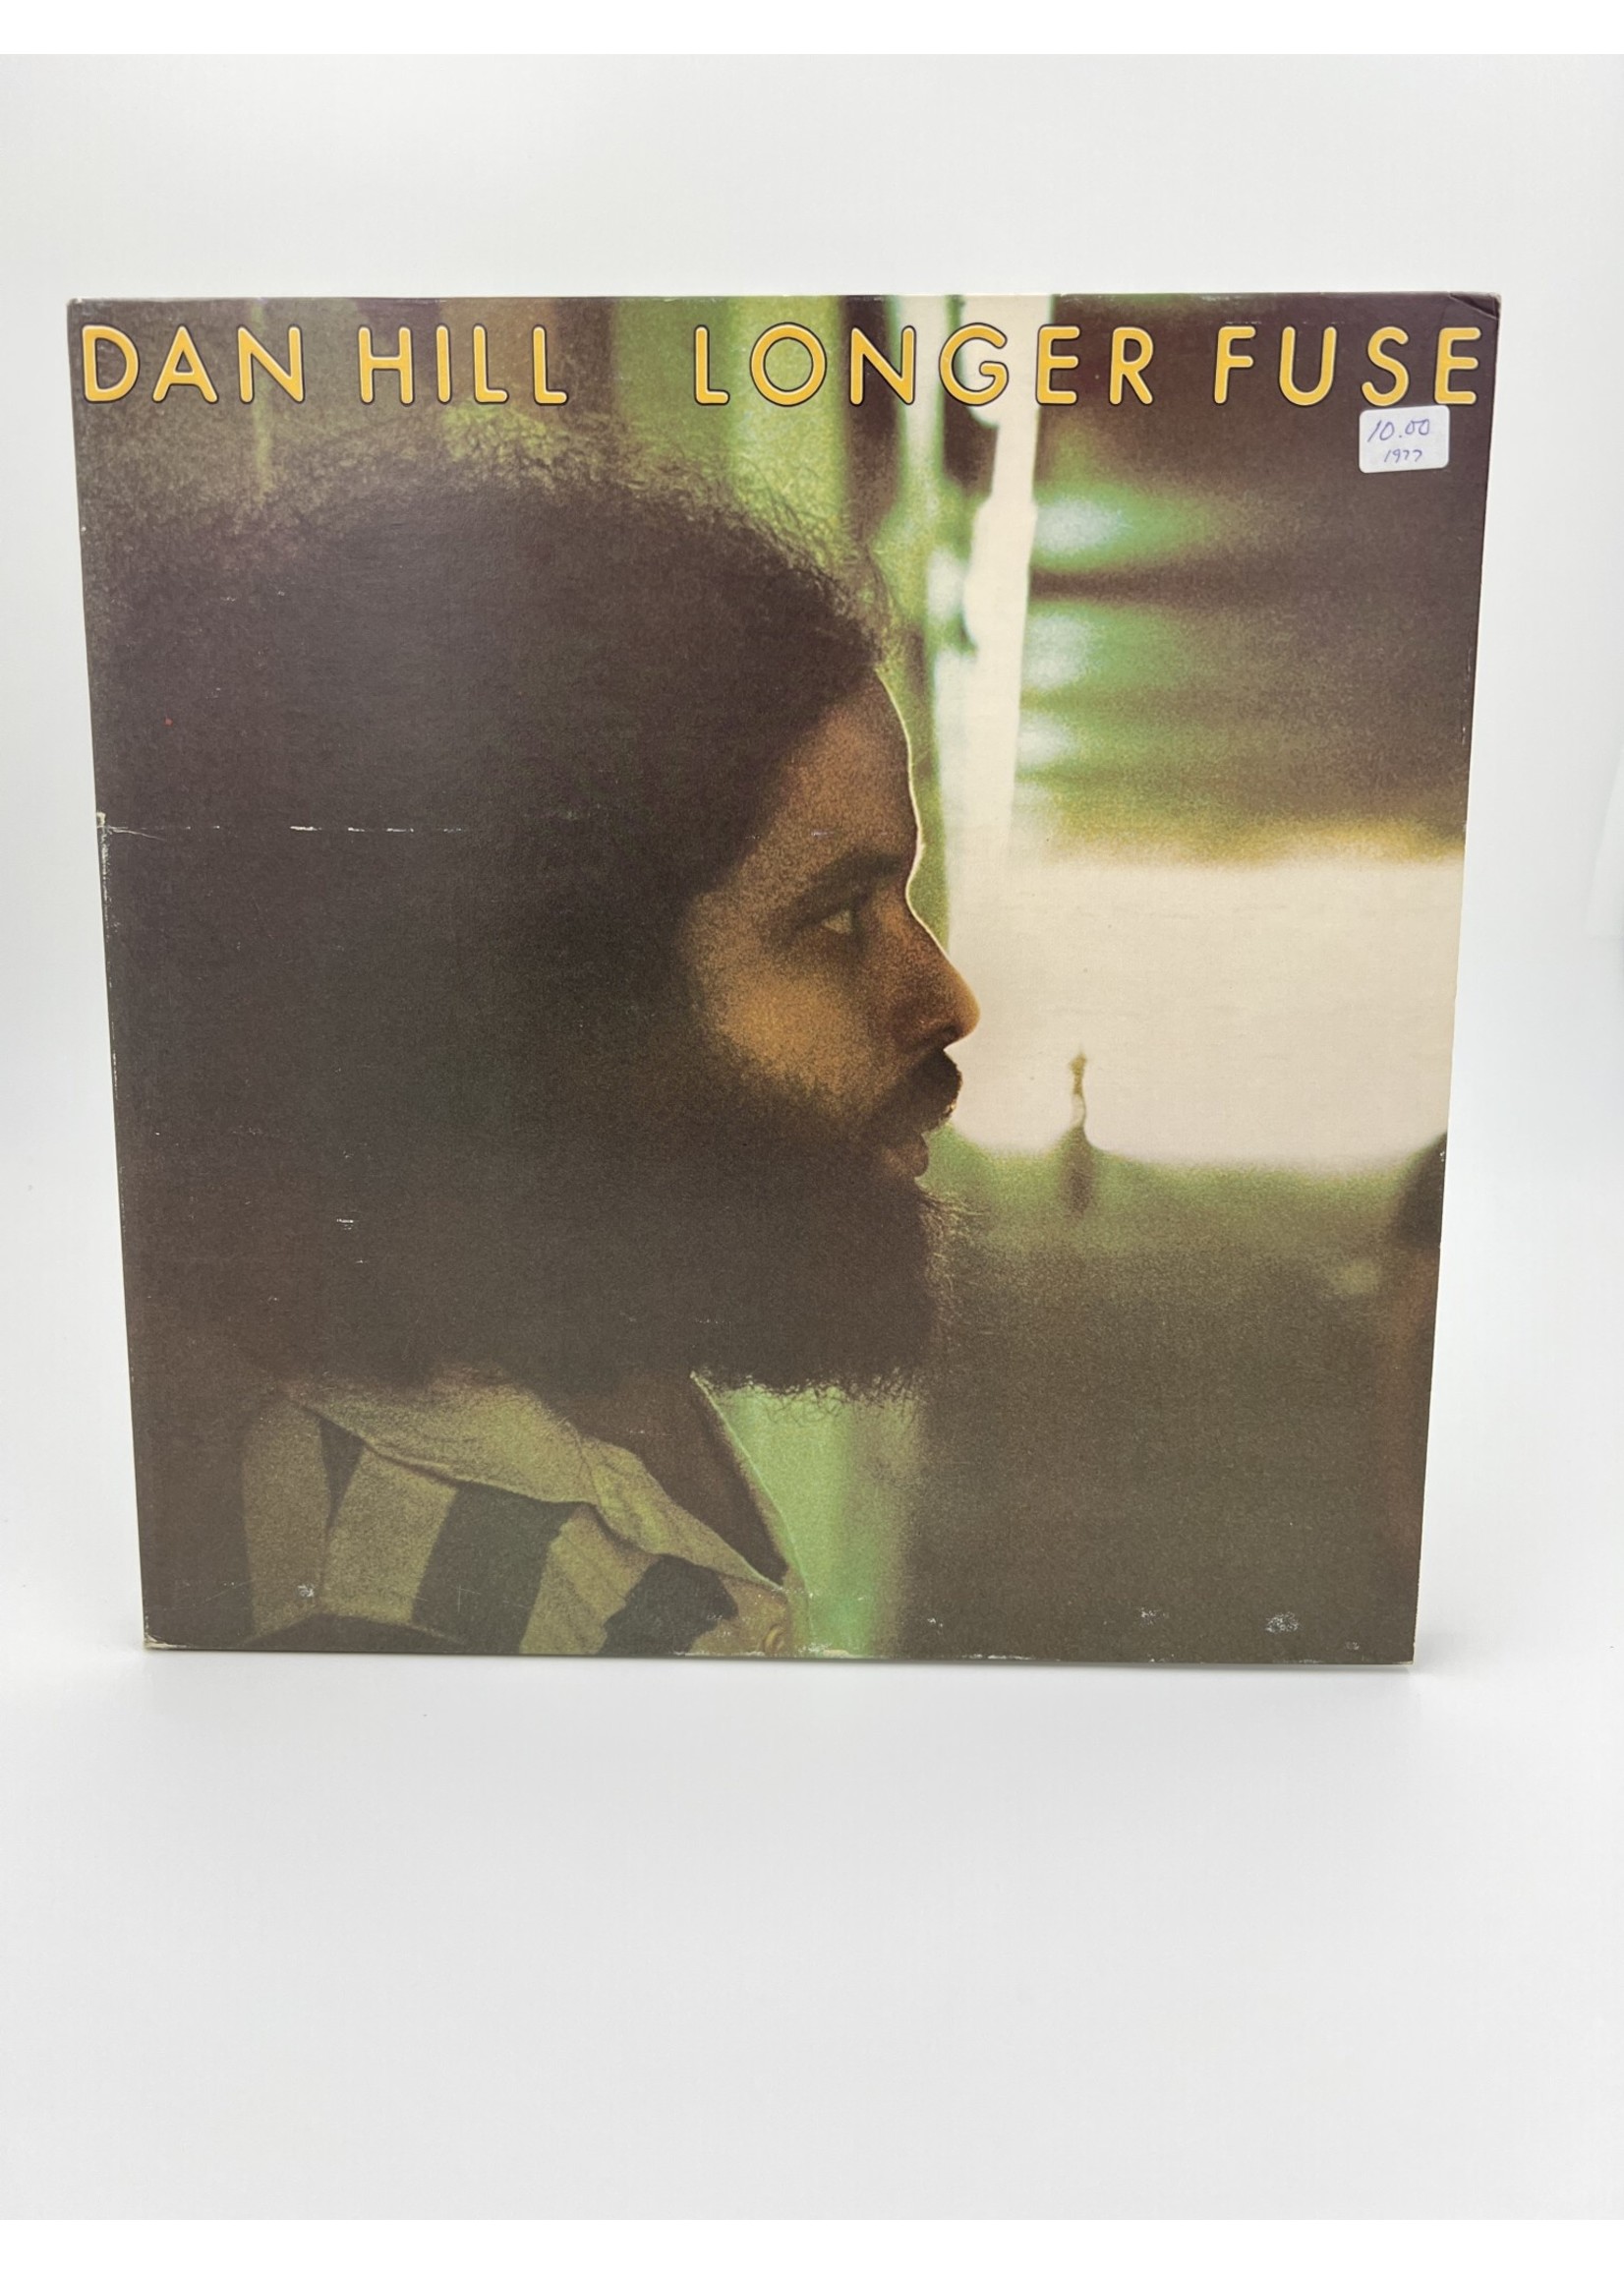 LP Dan Hill Longer Fuse Lp Record